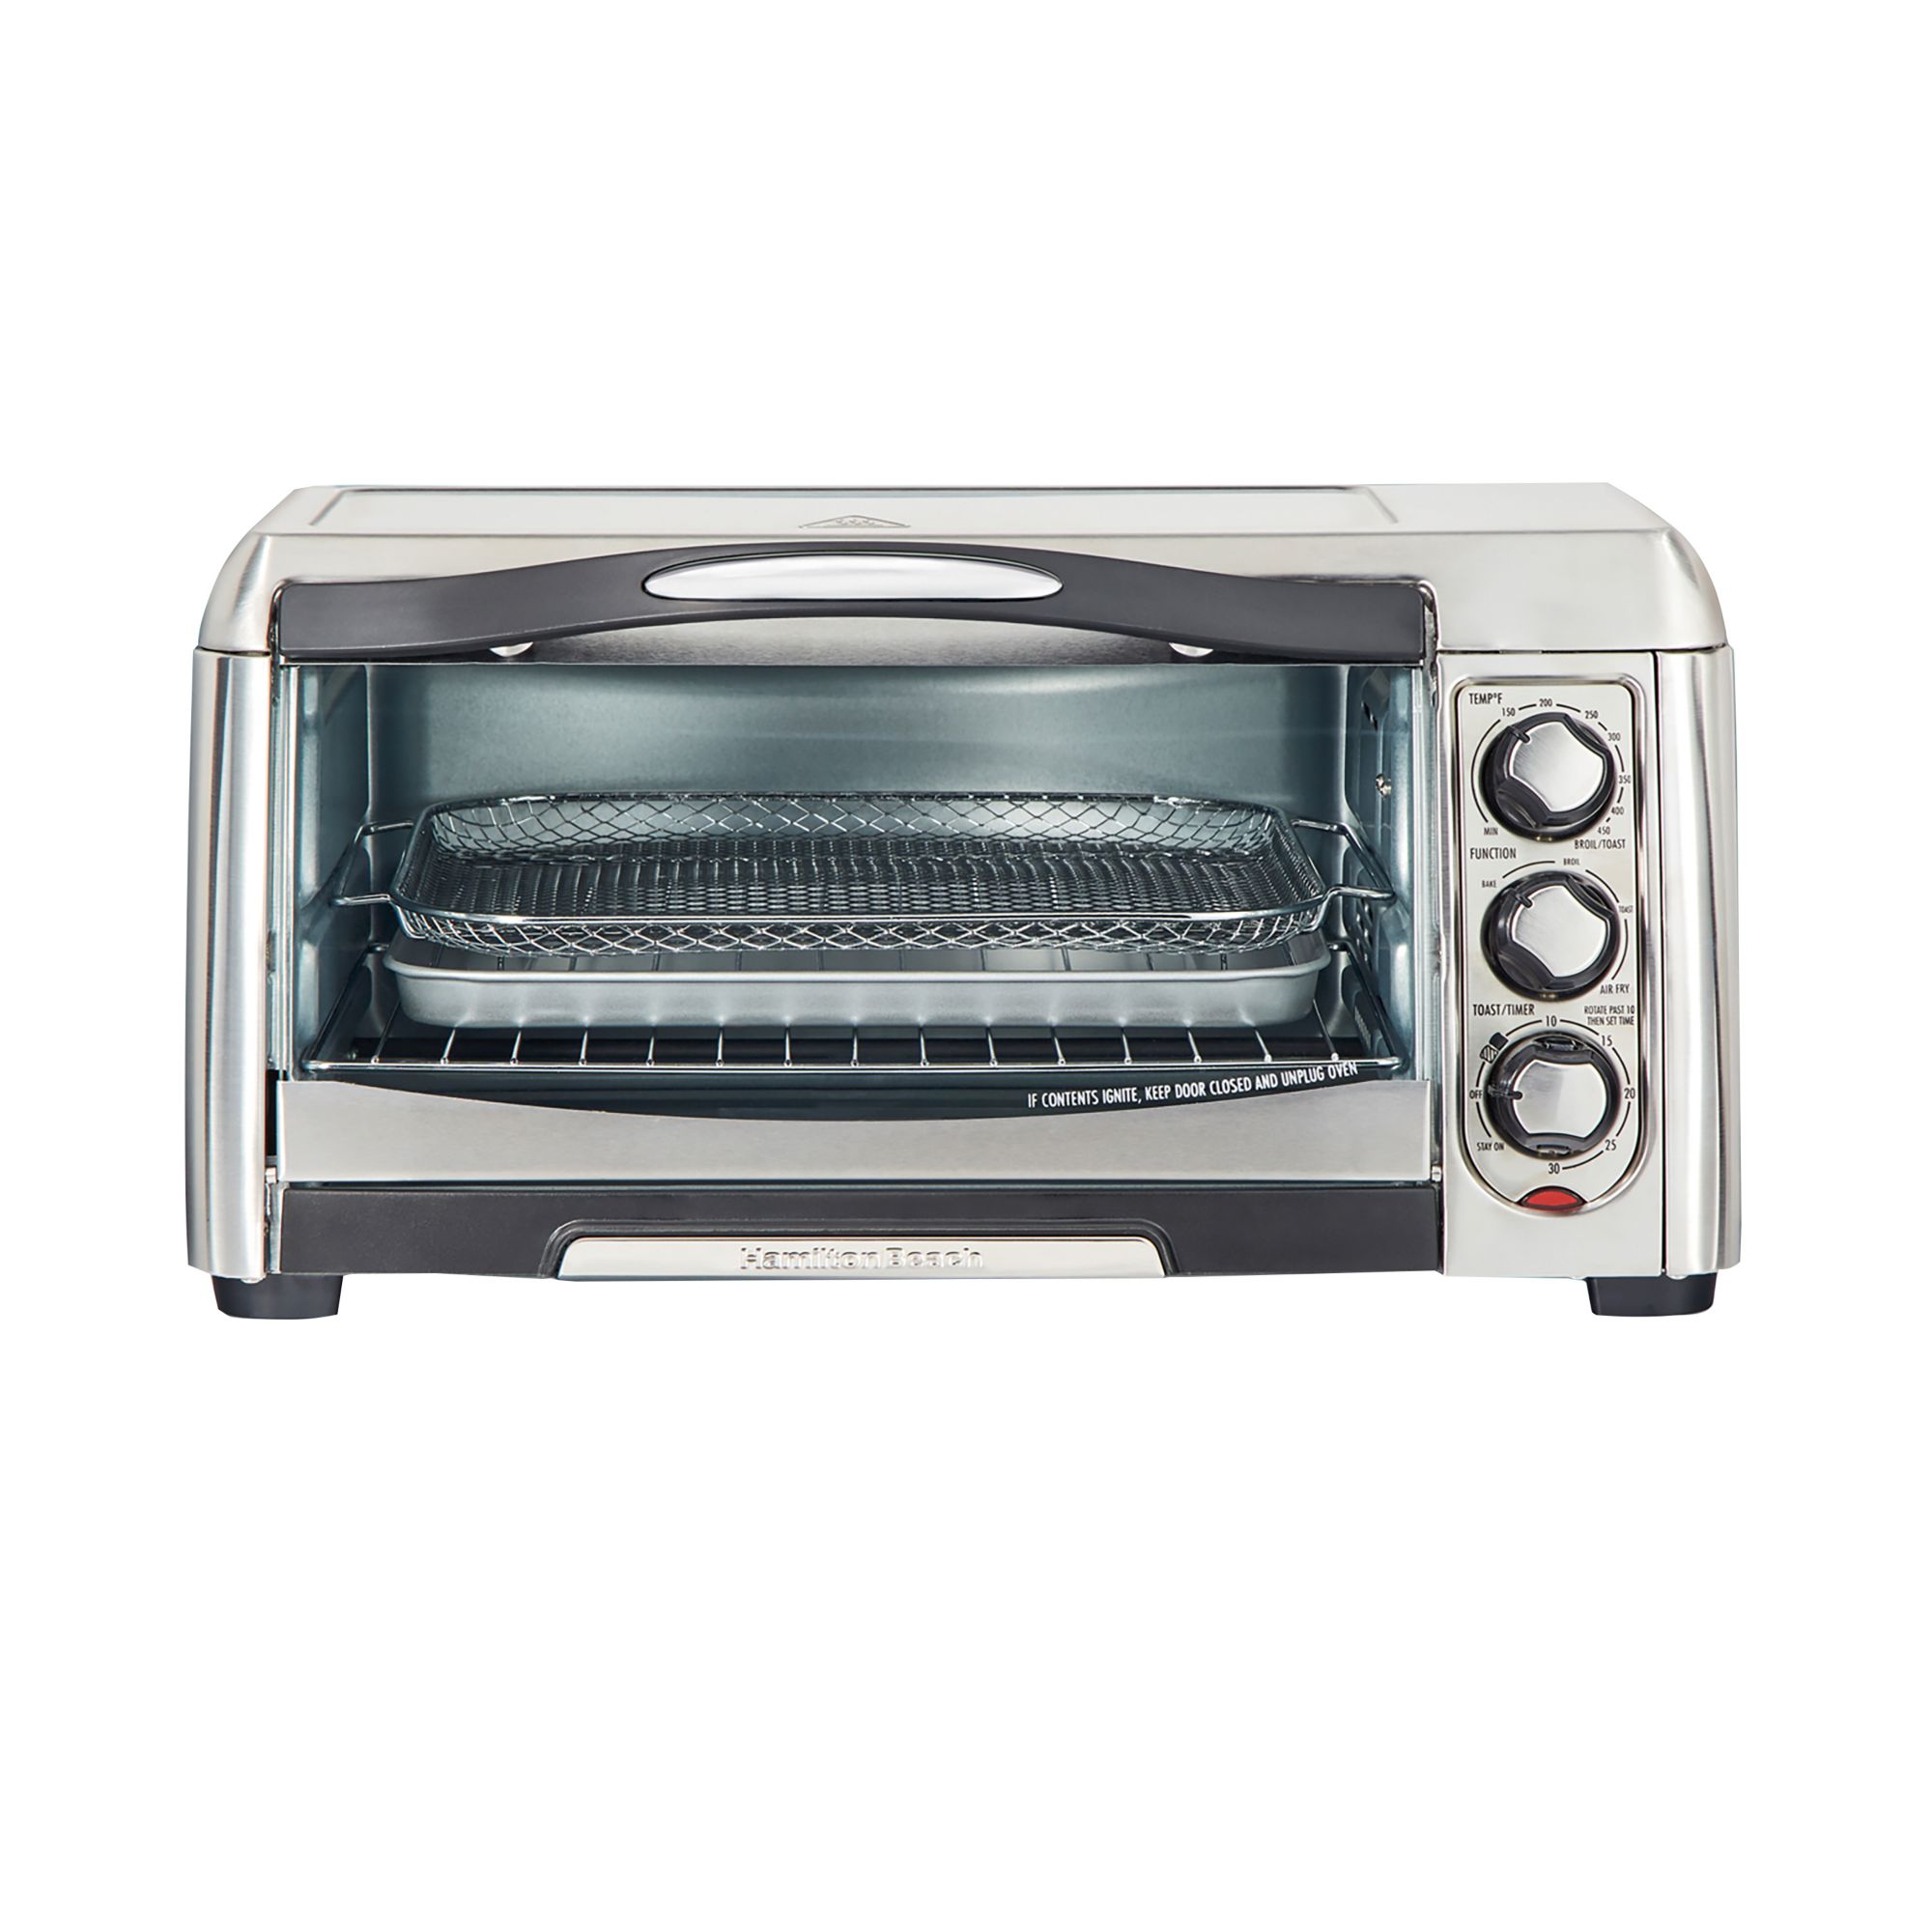 Hamilton Beach Sure-Crisp Air Fryer Toaster Oven Black - 31418 1 ct